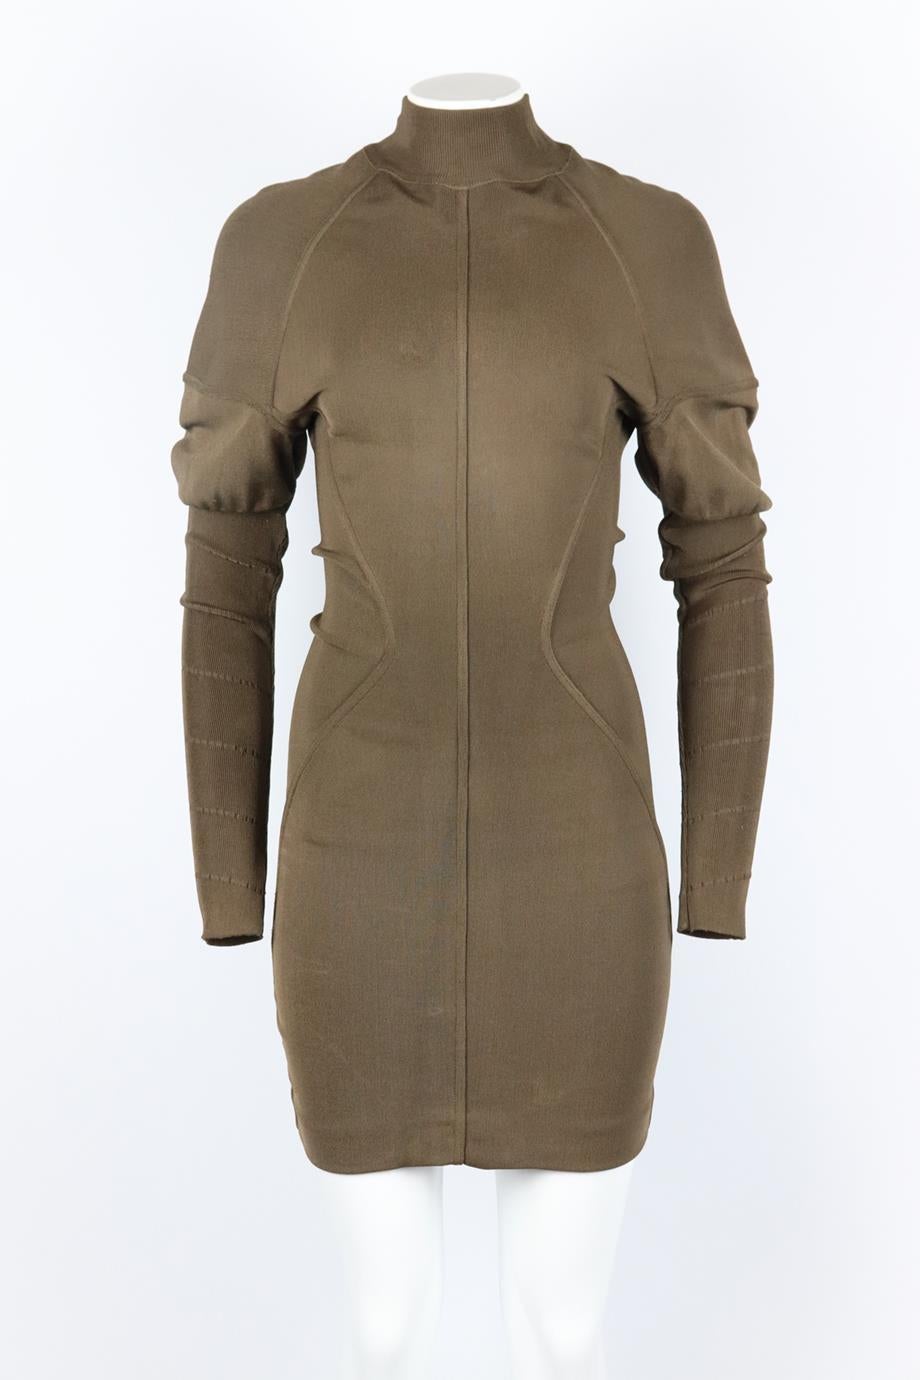 Azzedine Alaïa vintage stretch knit turtleneck mini dress. Brown. Long sleeve, turtleneck. Zip fastening at back. 80% Rayon, 15% polyester, 5% elastane. Size: XSmall (UK 6, US 2, FR 34, IT 38). Bust: 33 in. Waist: 23.5 in. Hips: 32.4 in. Length: